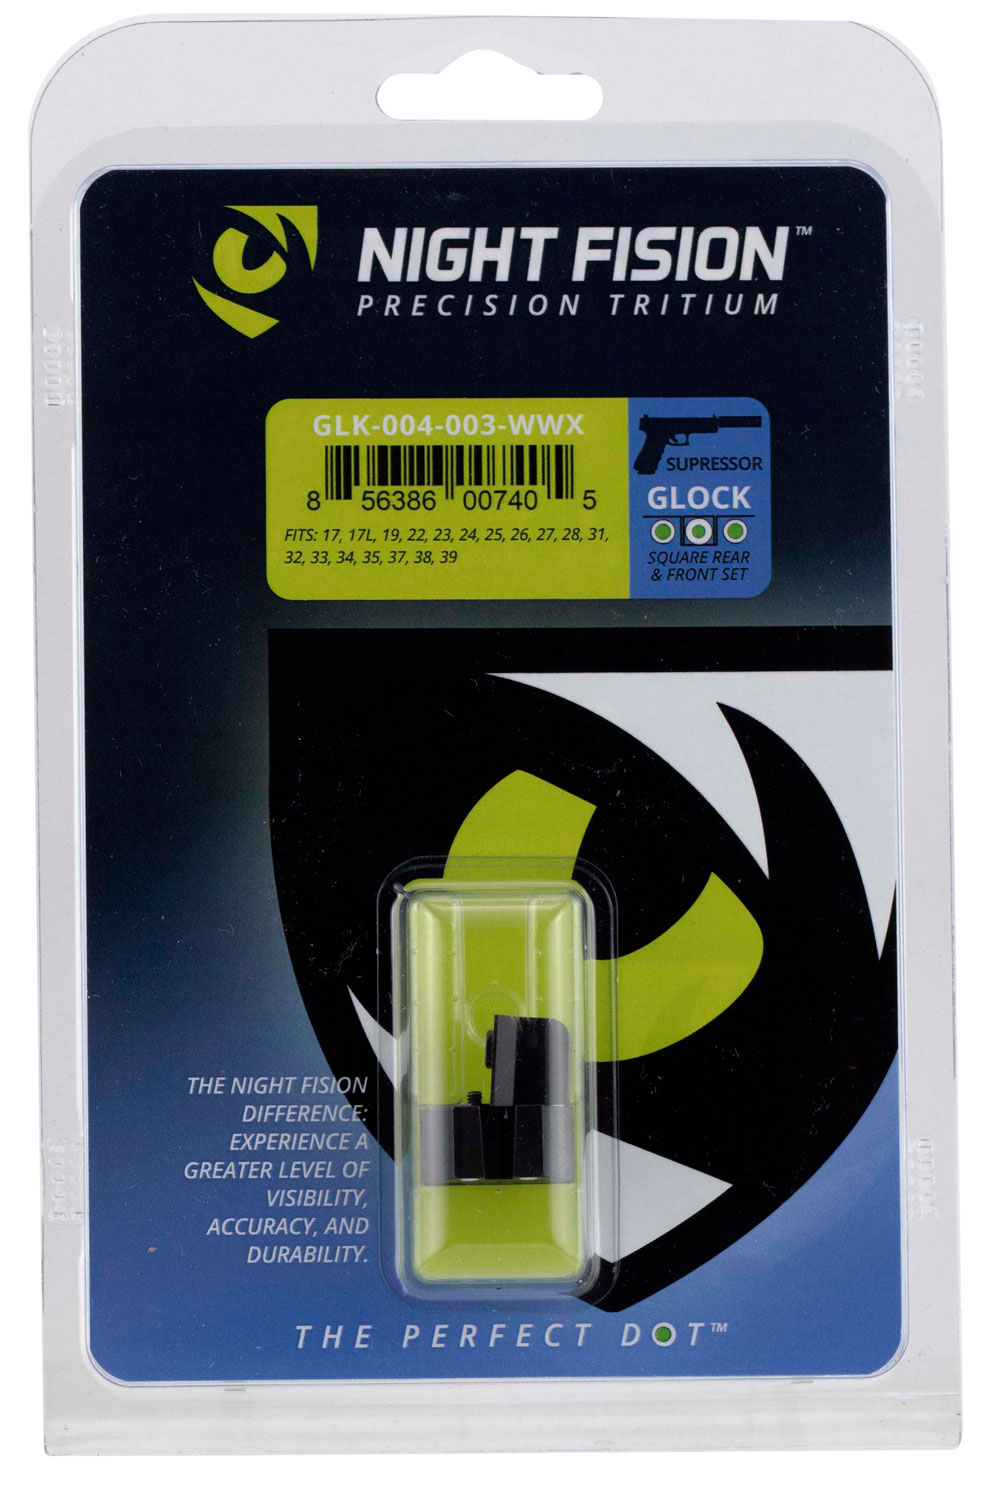 Night Fision Glock Suppressor Height Tritium Night Sight Set - White Front | White Square Notch Rear | Fits Glock 17, 17L, 19, 22, 23, 24, 25, 26, 27, 28, 31, 32, 33, 34, 35, 37, 38, 39, 20, 21, 29, 30, 36, 40, 41